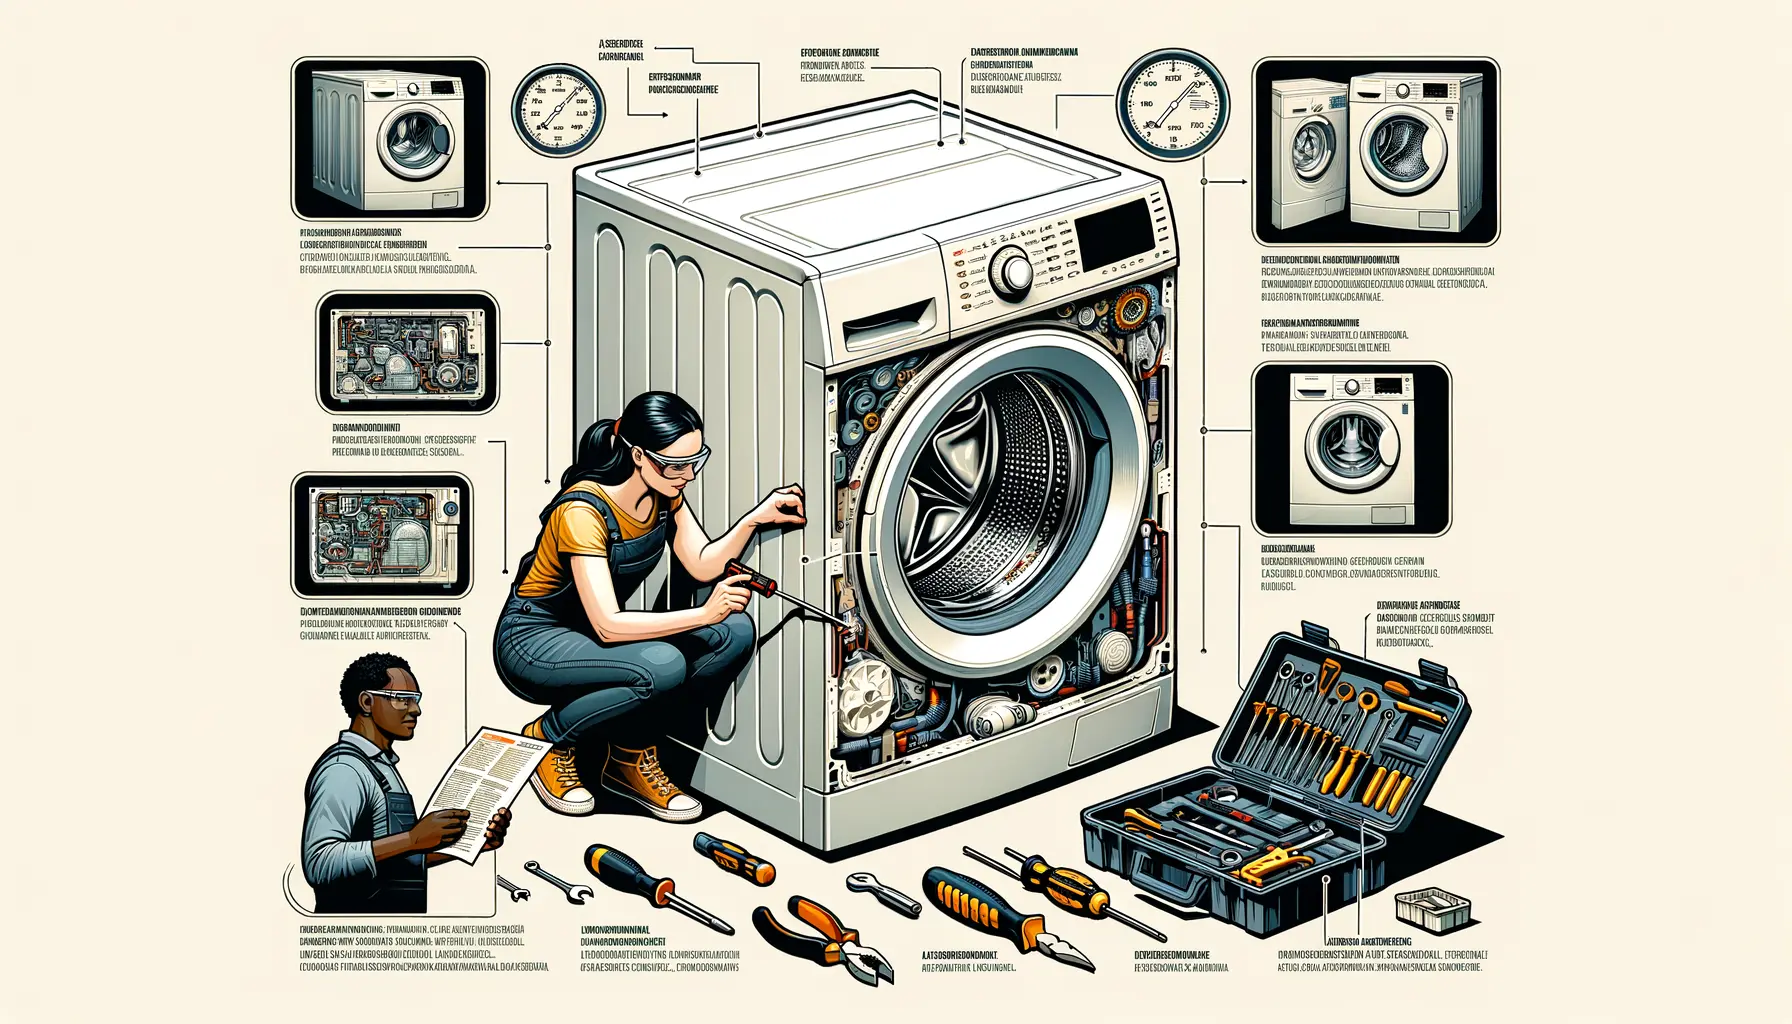 make me a graphic of washing machine maintenance. 